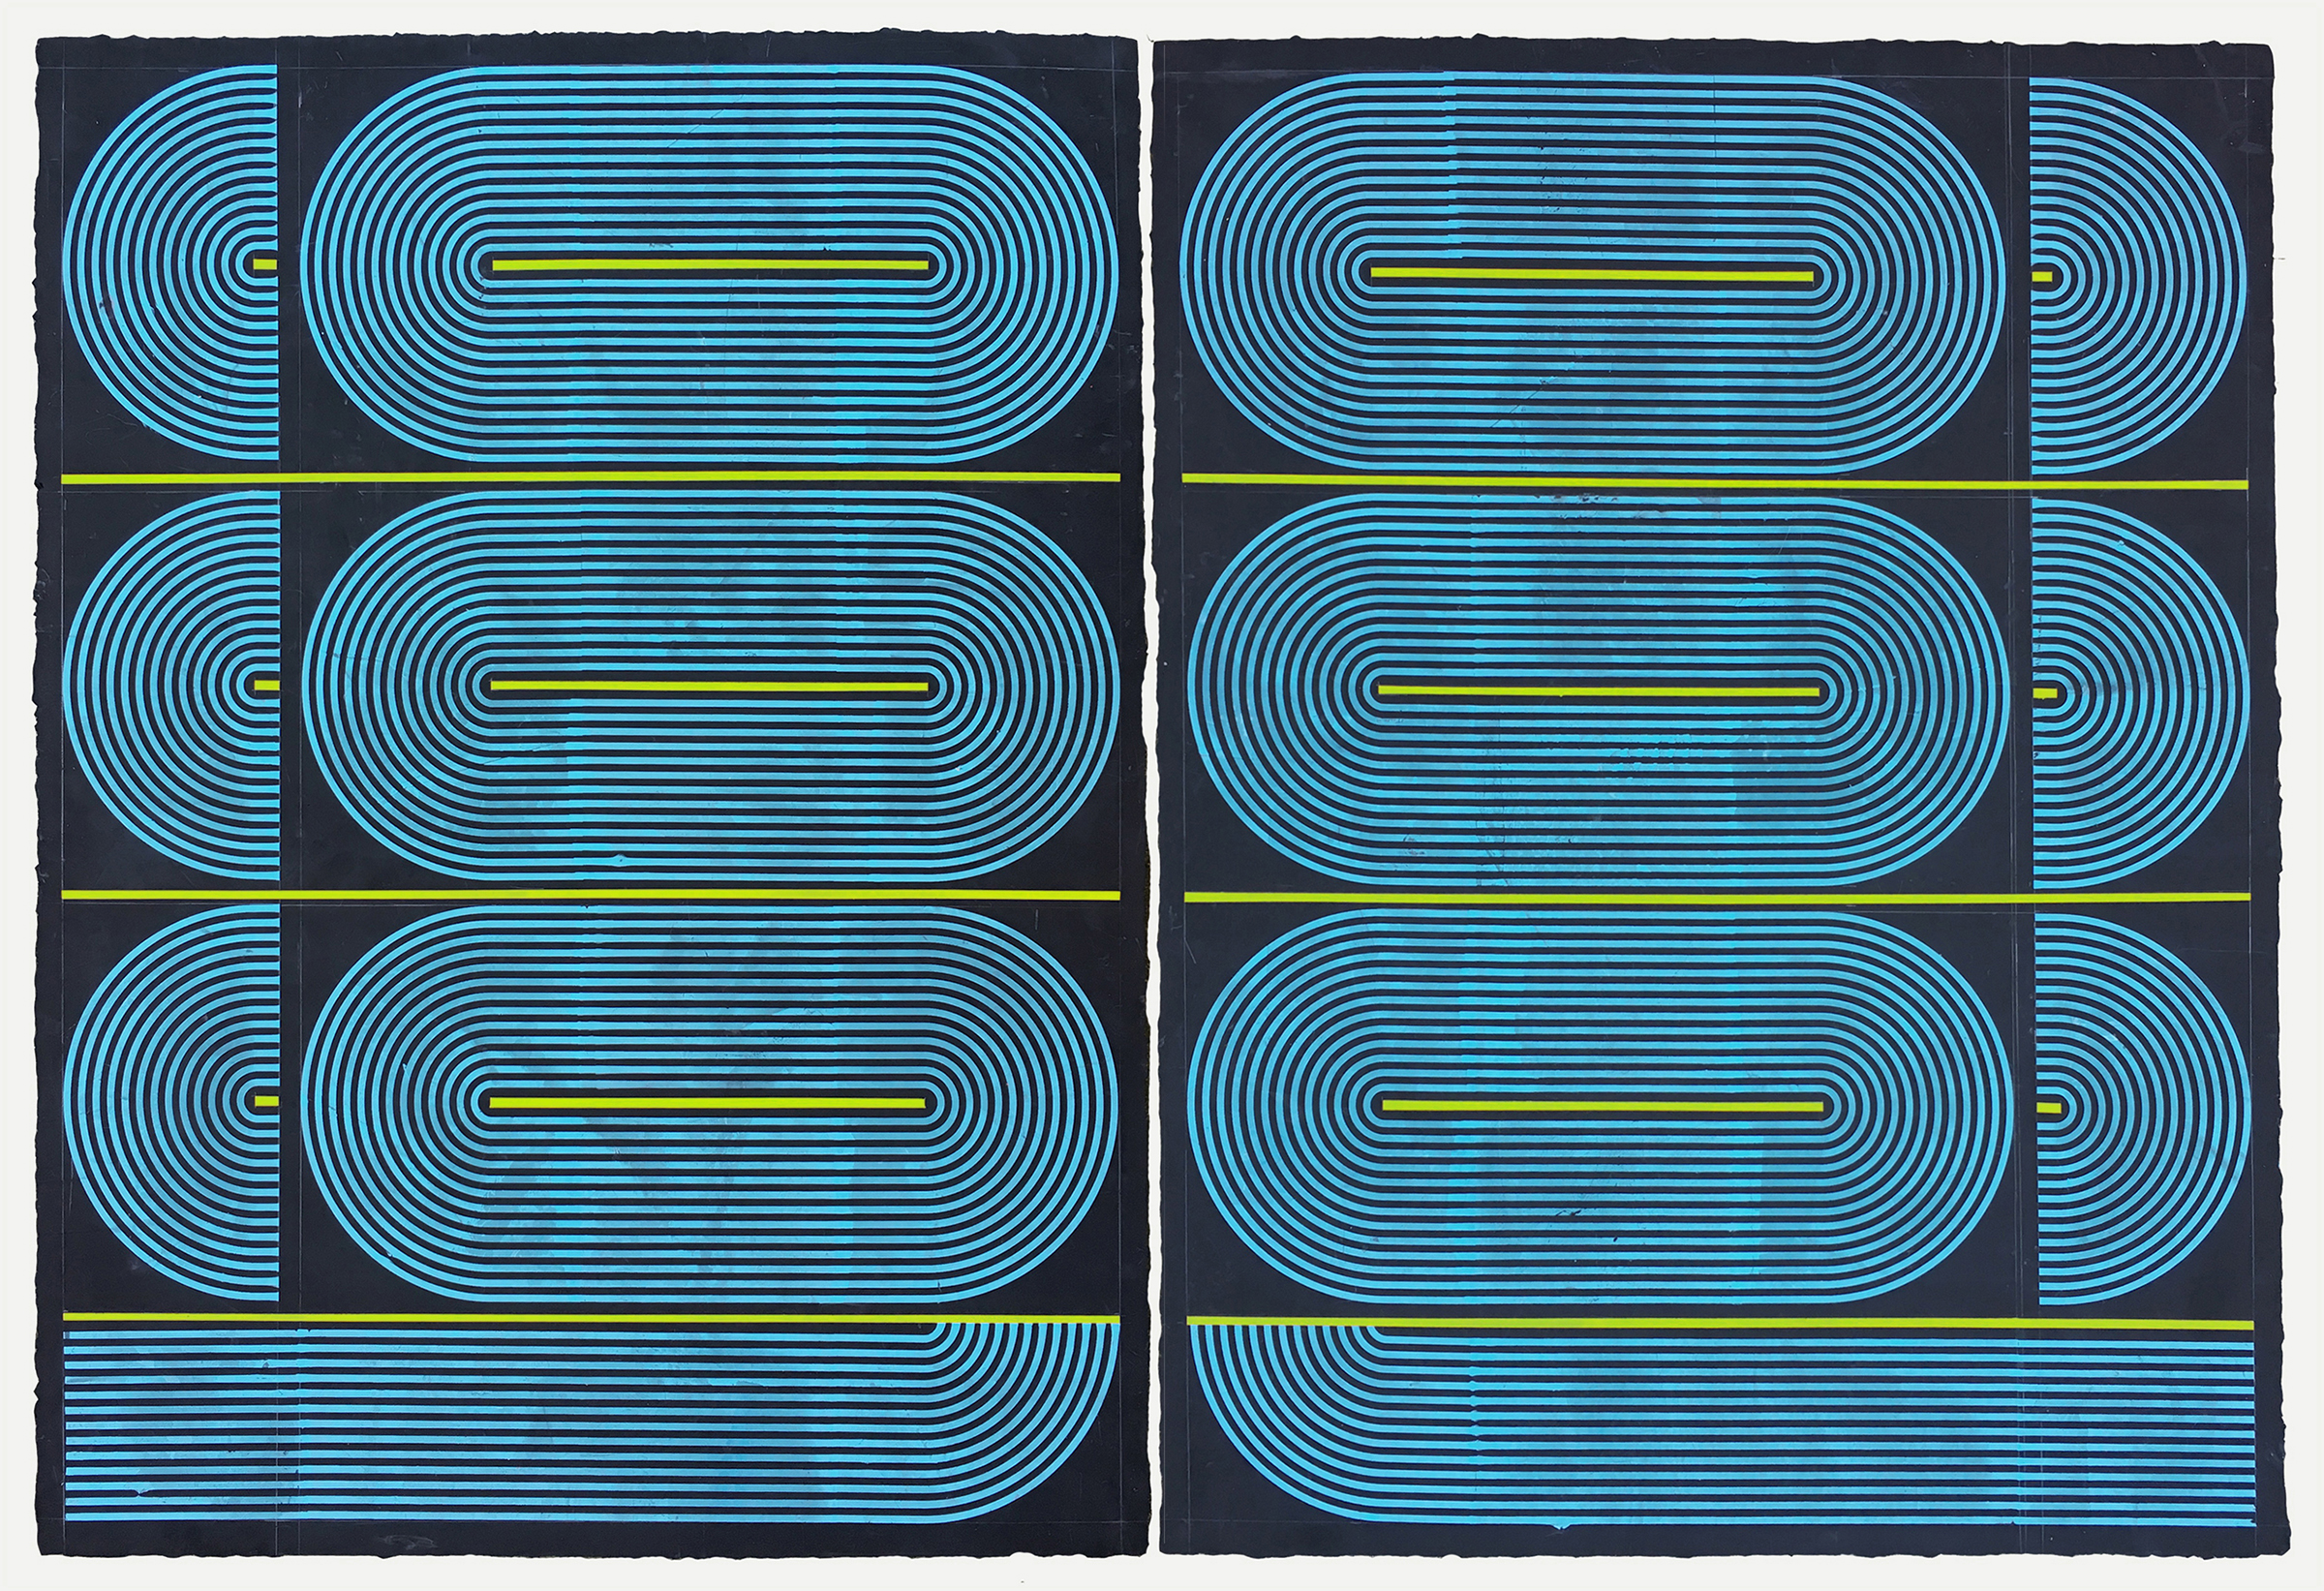  ELISE FERGUSON Boniculars, 2018 Pigmented plaster on MDF panel, 40” x 60” 